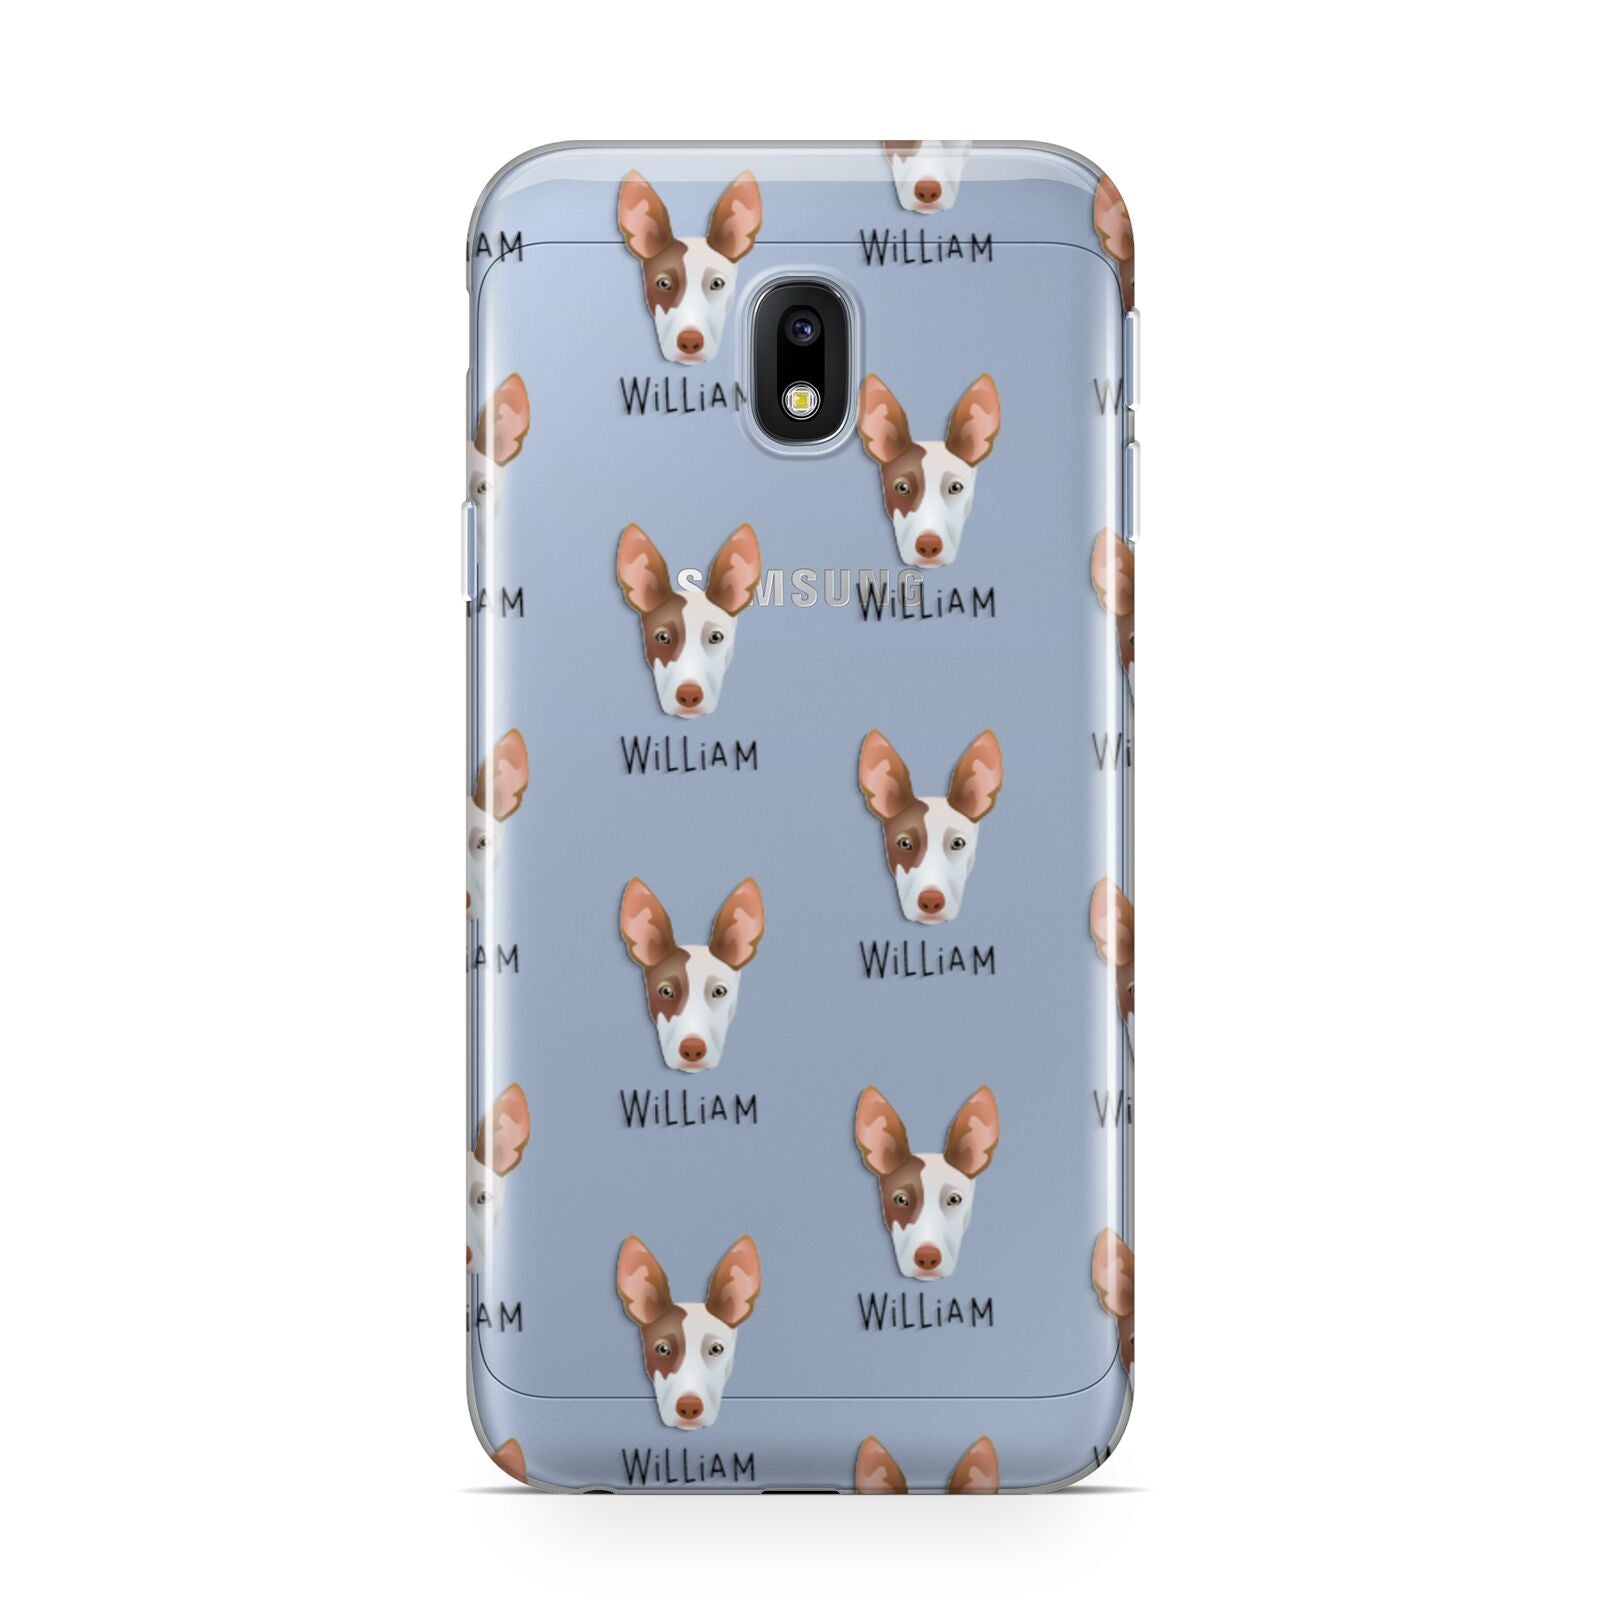 Ibizan Hound Icon with Name Samsung Galaxy J3 2017 Case